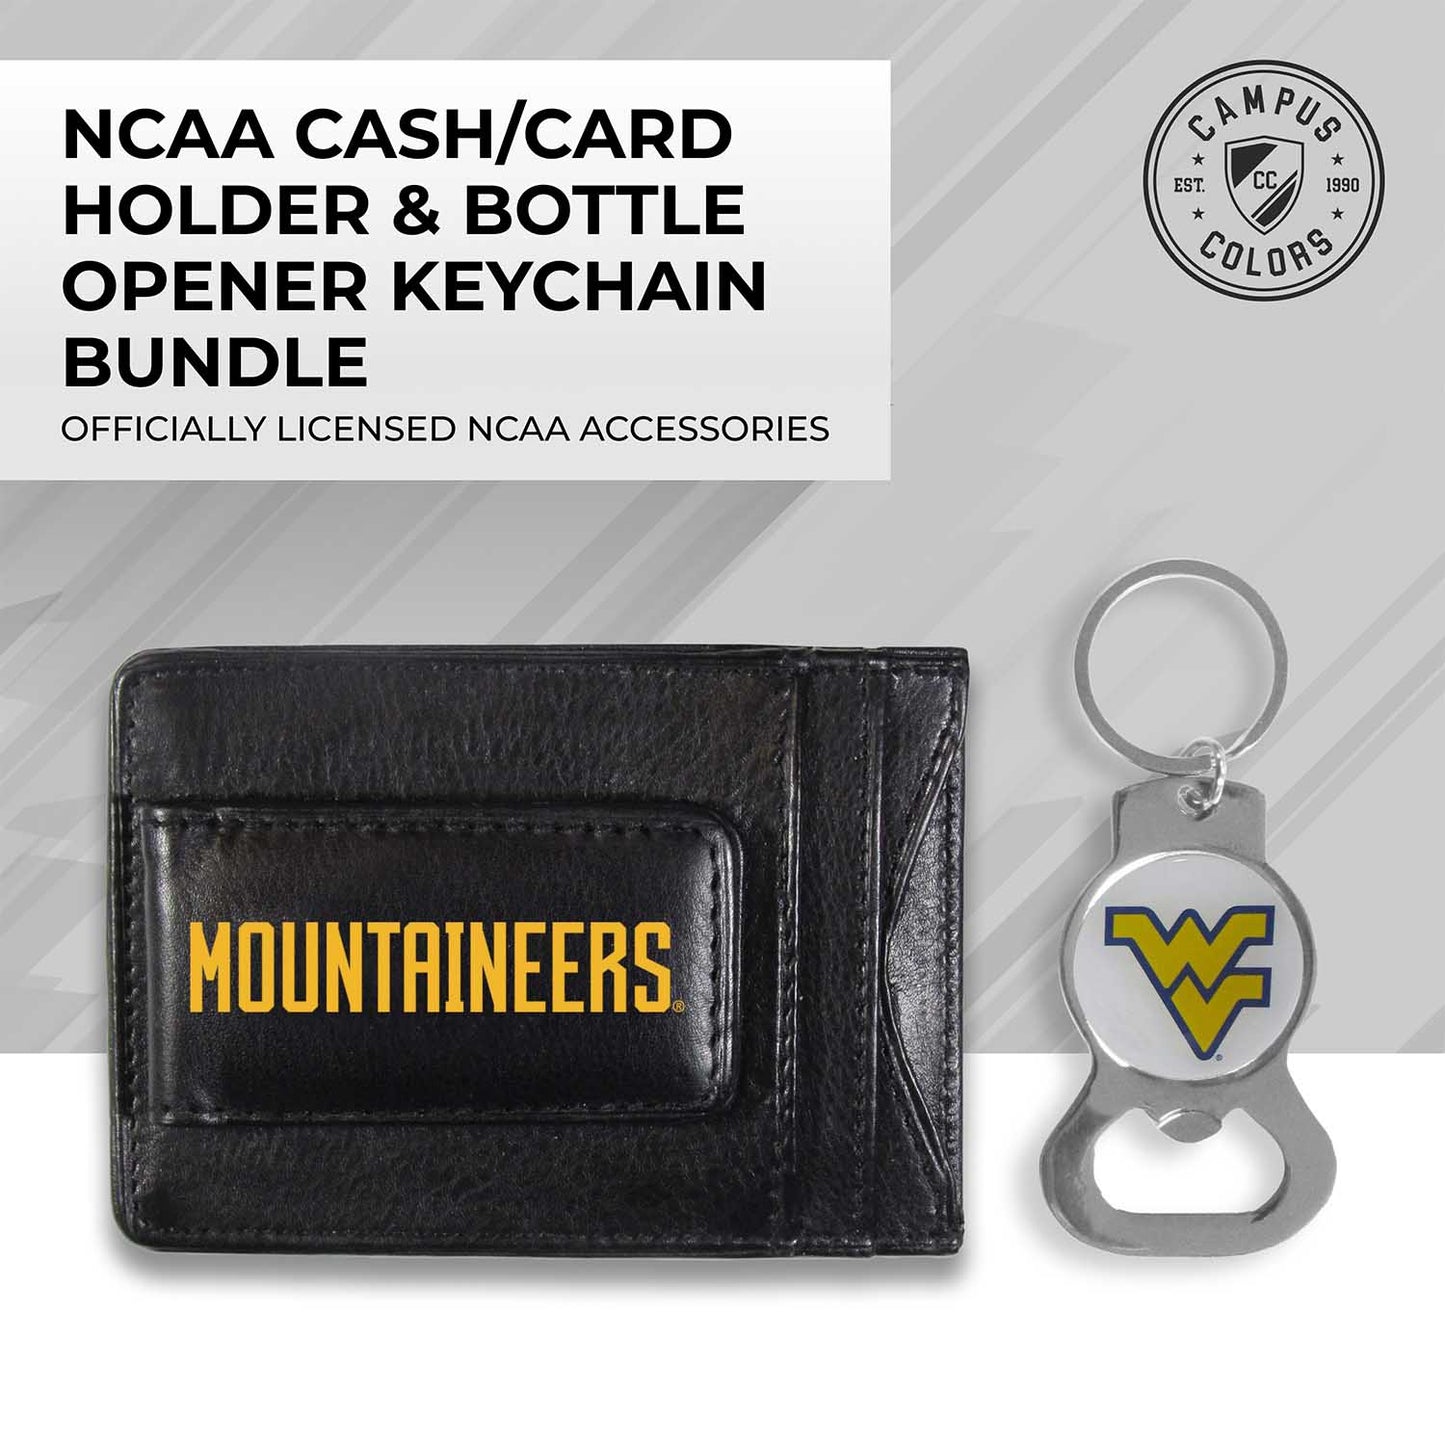 West Virginia Mountaineers School Logo Leather Card/Cash Holder and Bottle Opener Keychain Bundle - Black